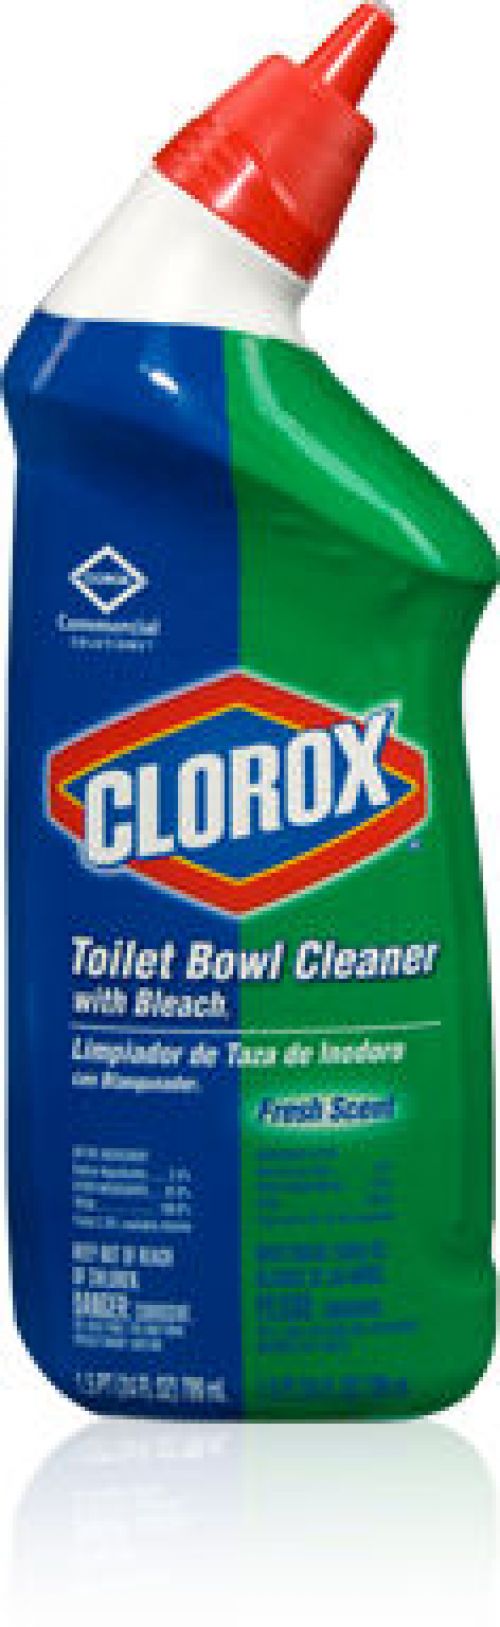 Toilet Bowl Cleaner w/ Bleach, 24 oz.